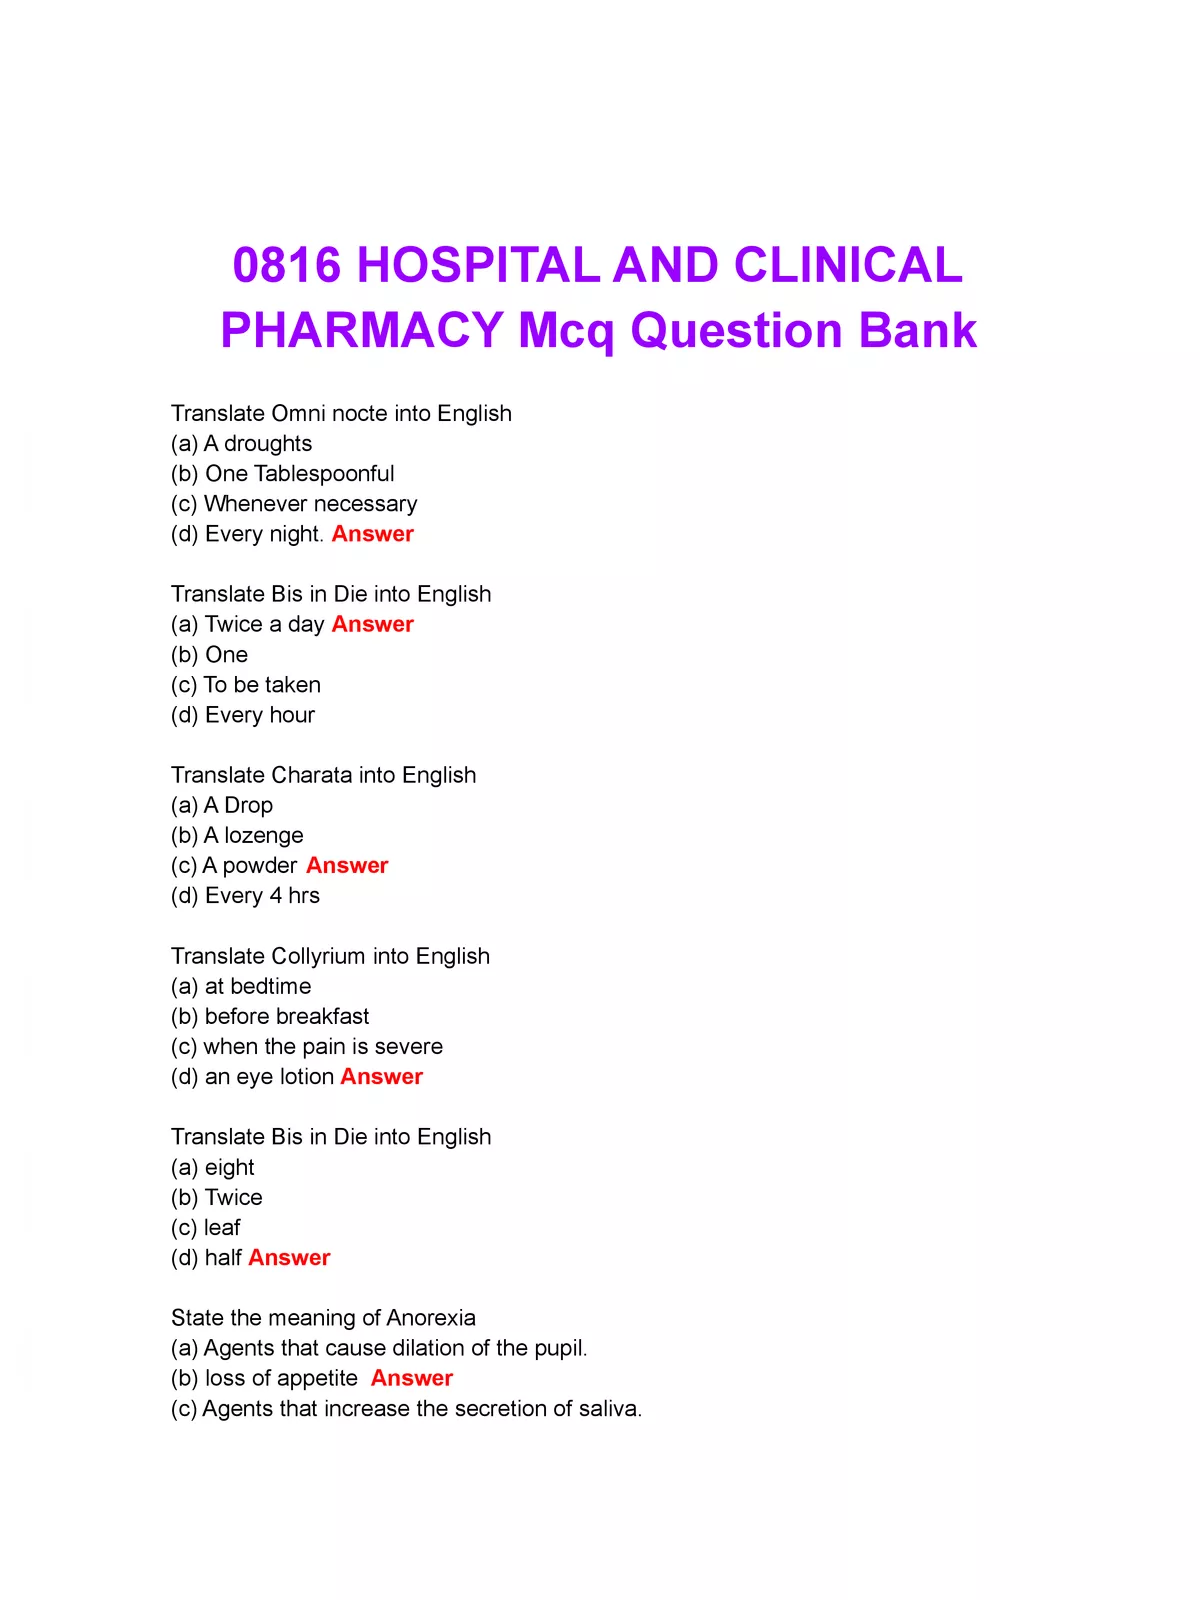 Hospital and Clinical Pharmacy MCQ